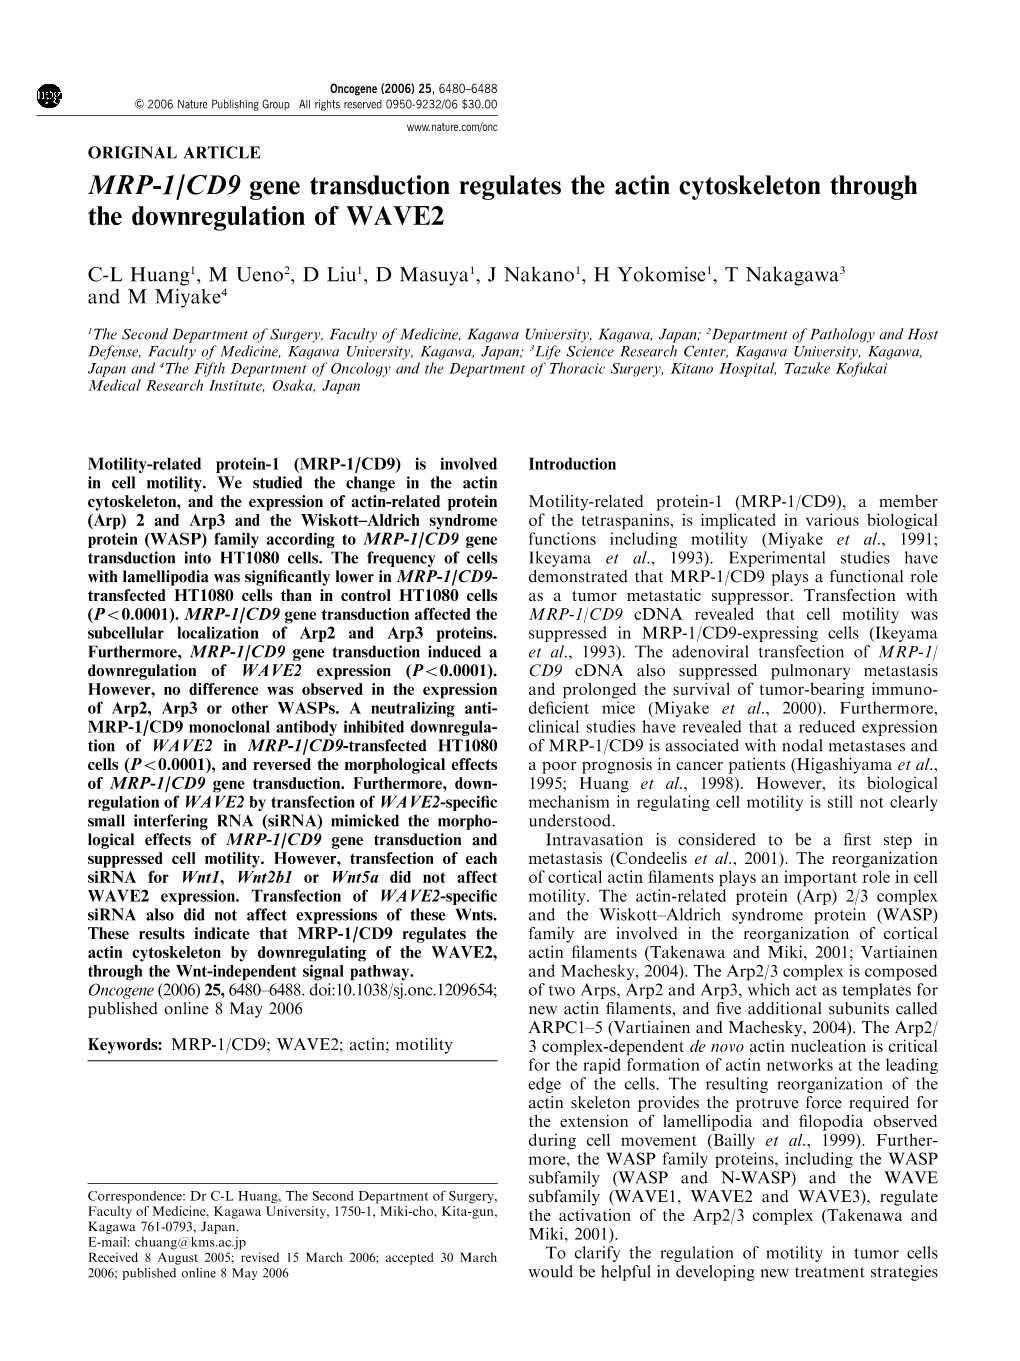 MRP-1/CD9 Gene Transduction Regulates the Actin Cytoskeleton Through the Downregulation of WAVE2